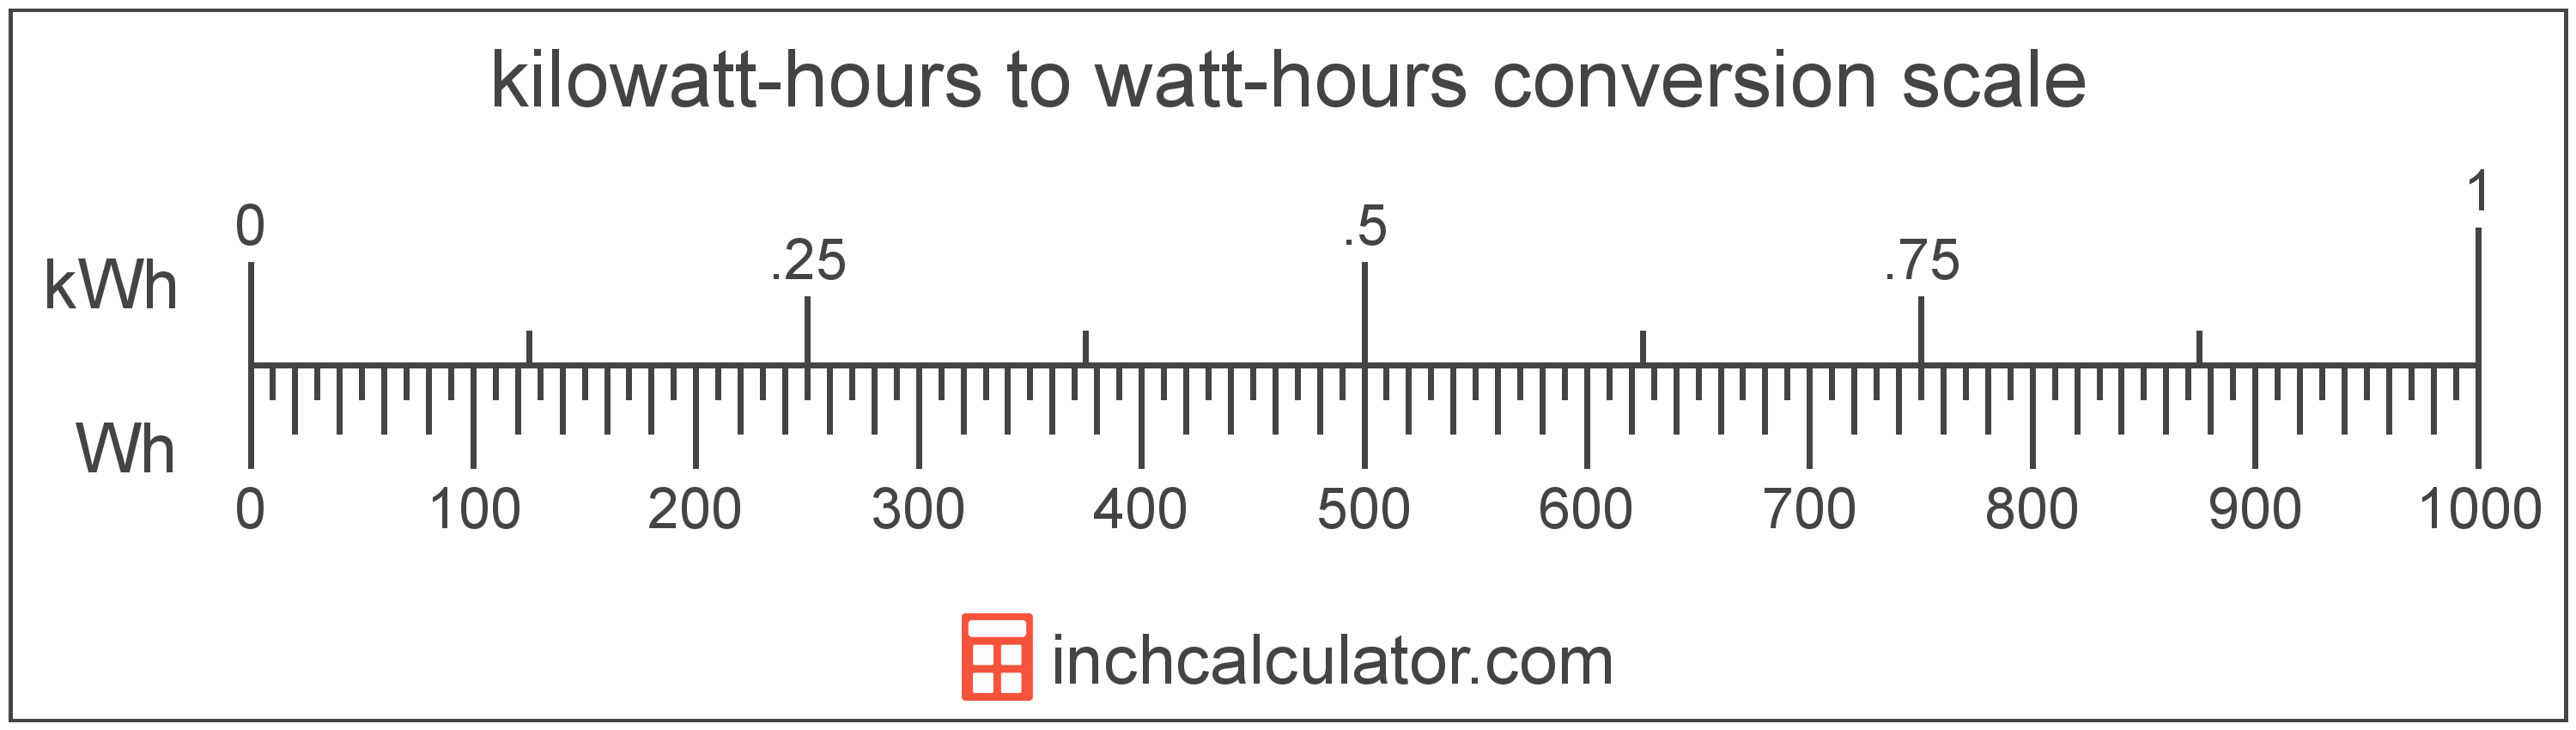 conversion scale showing watt-hours and equivalent kilowatt-hours energy values